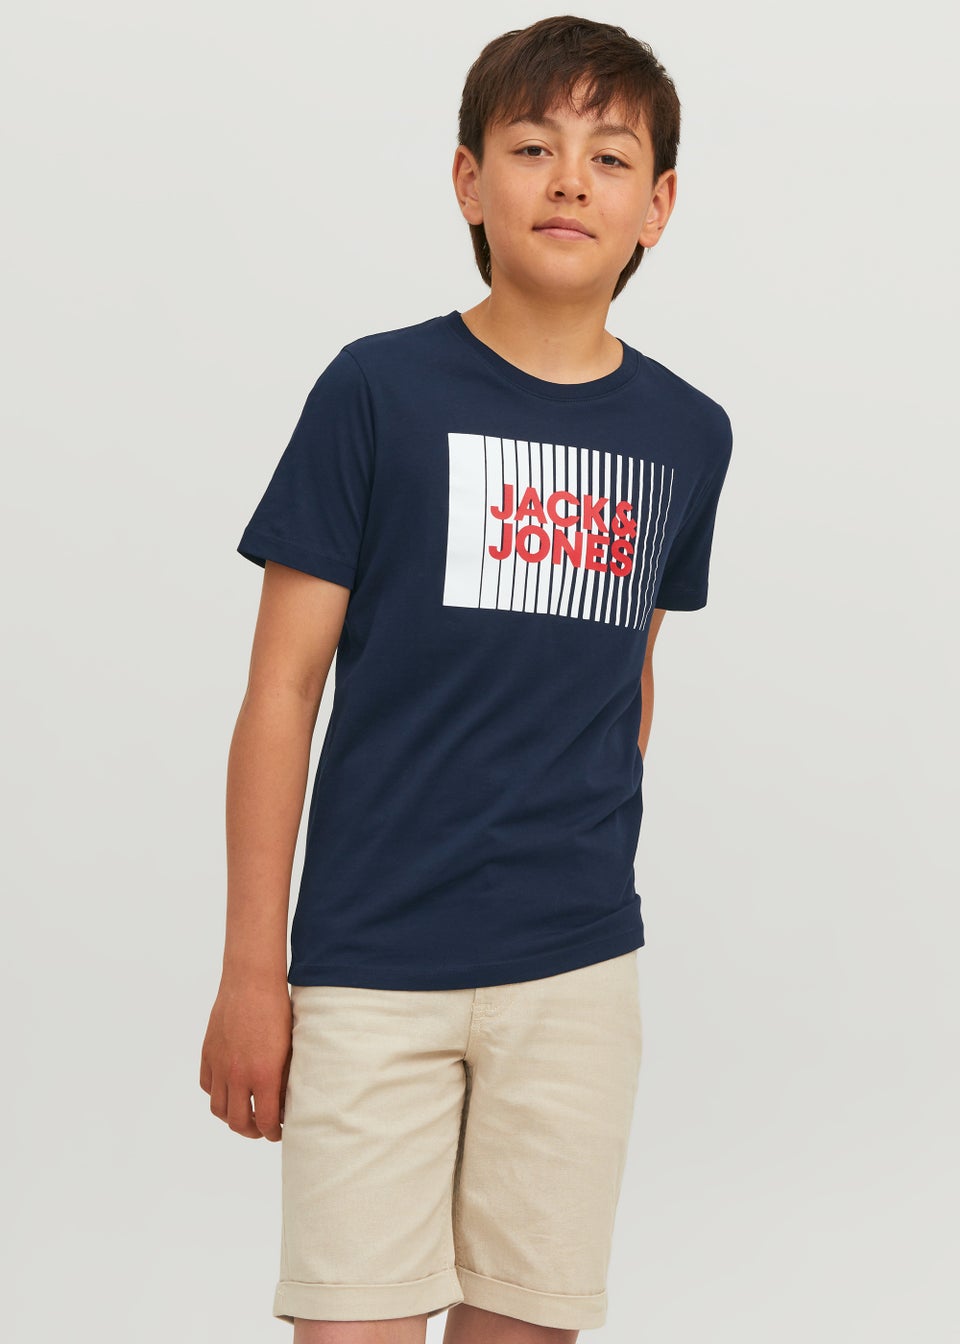 Jack & Jones Junior Navy Logo T-Shirt (6-16yrs)